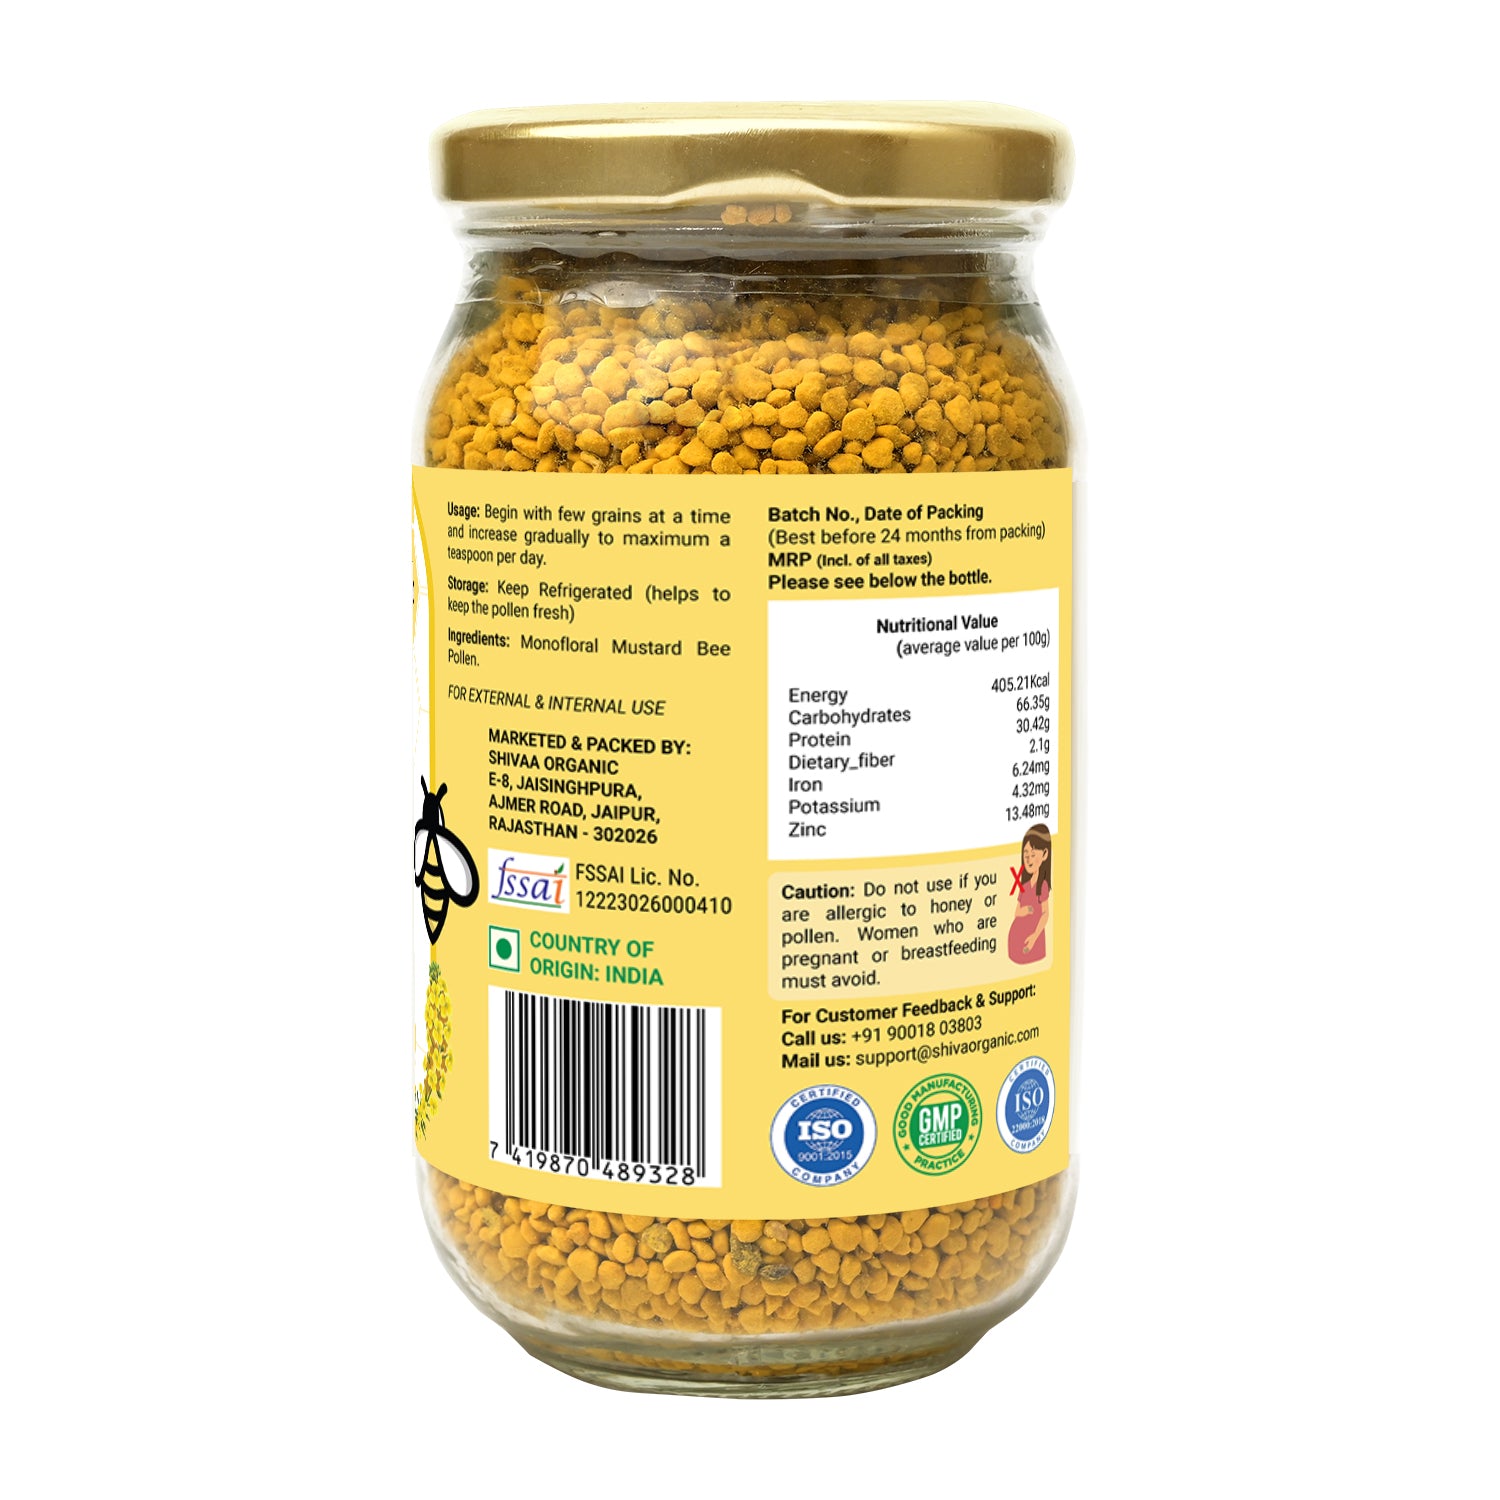 250 gm | Mustard Bee Pollen | Energy Immunity Booster | Vitamin b12 | Shiva Organic